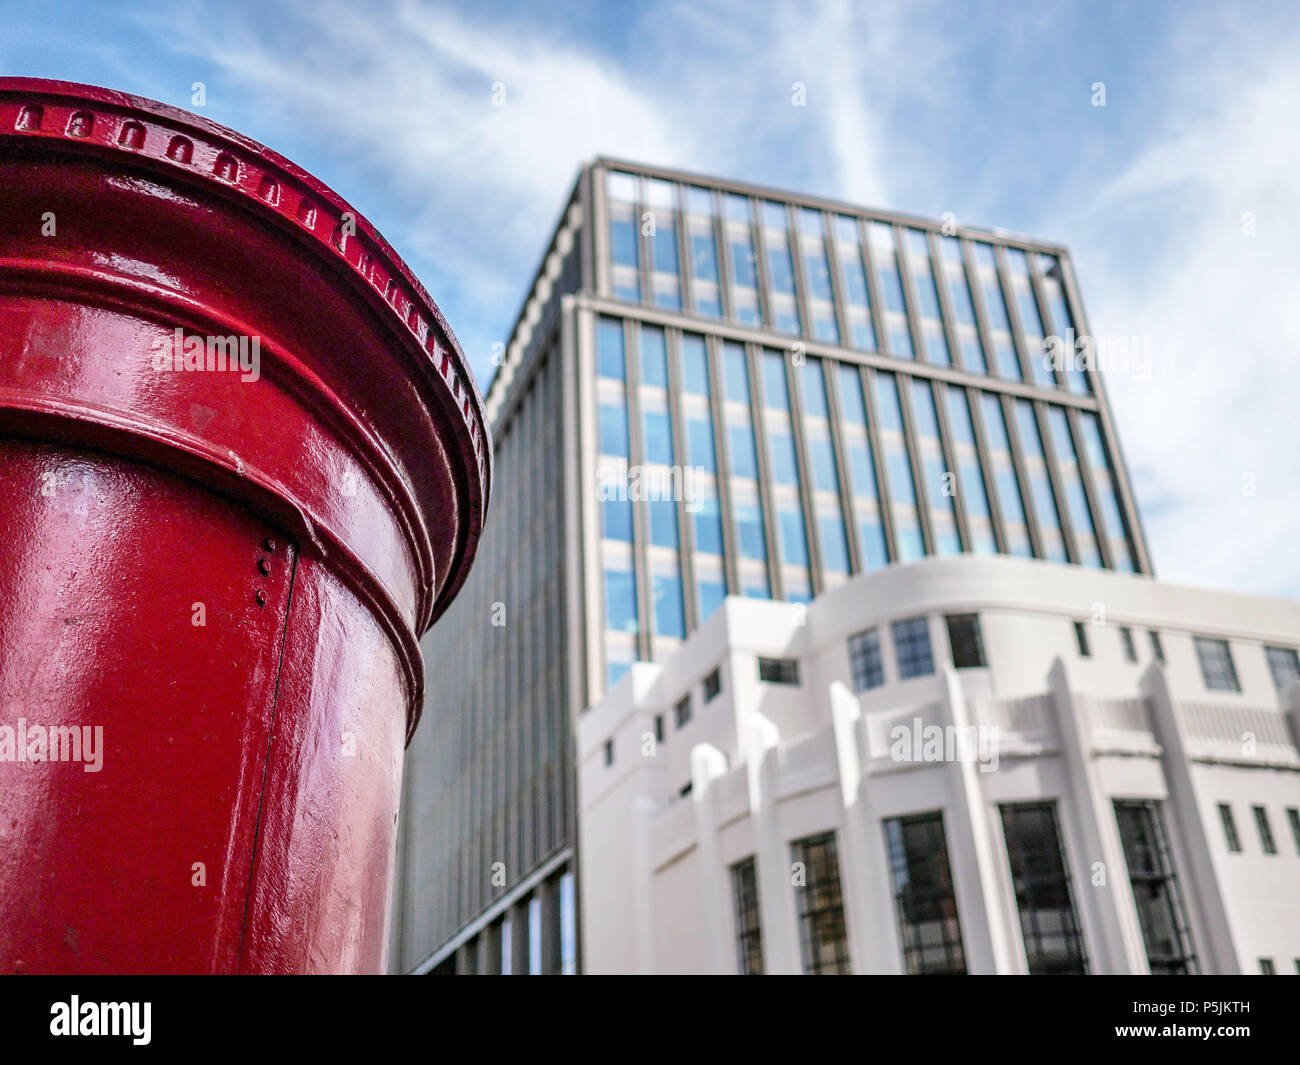 Red Post Box in an urban setting, Glasgow, Scotland, United Kingdom Stock Photo